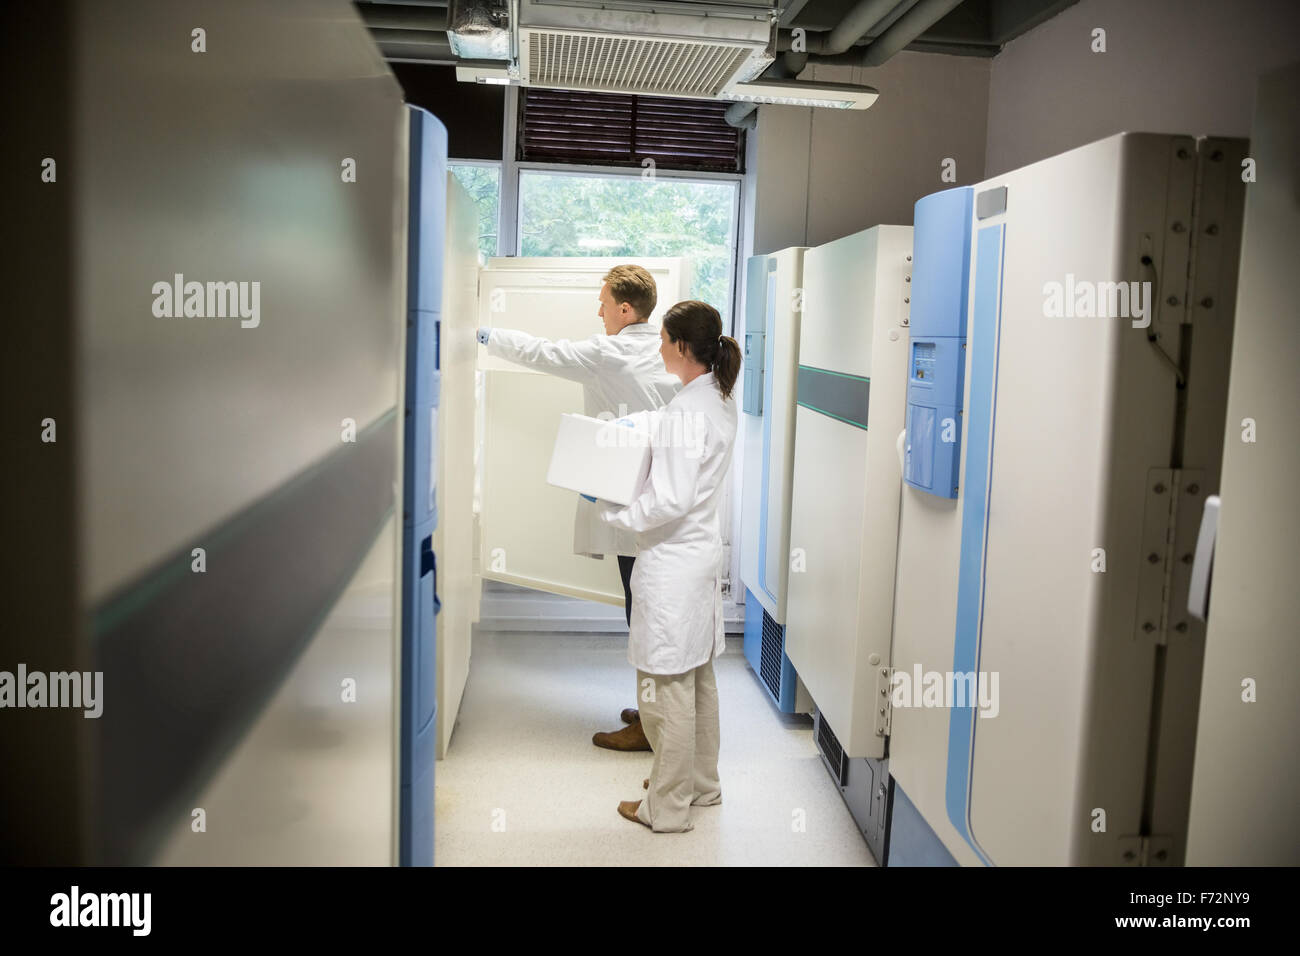 Two scientists using large fridge unit Stock Photo